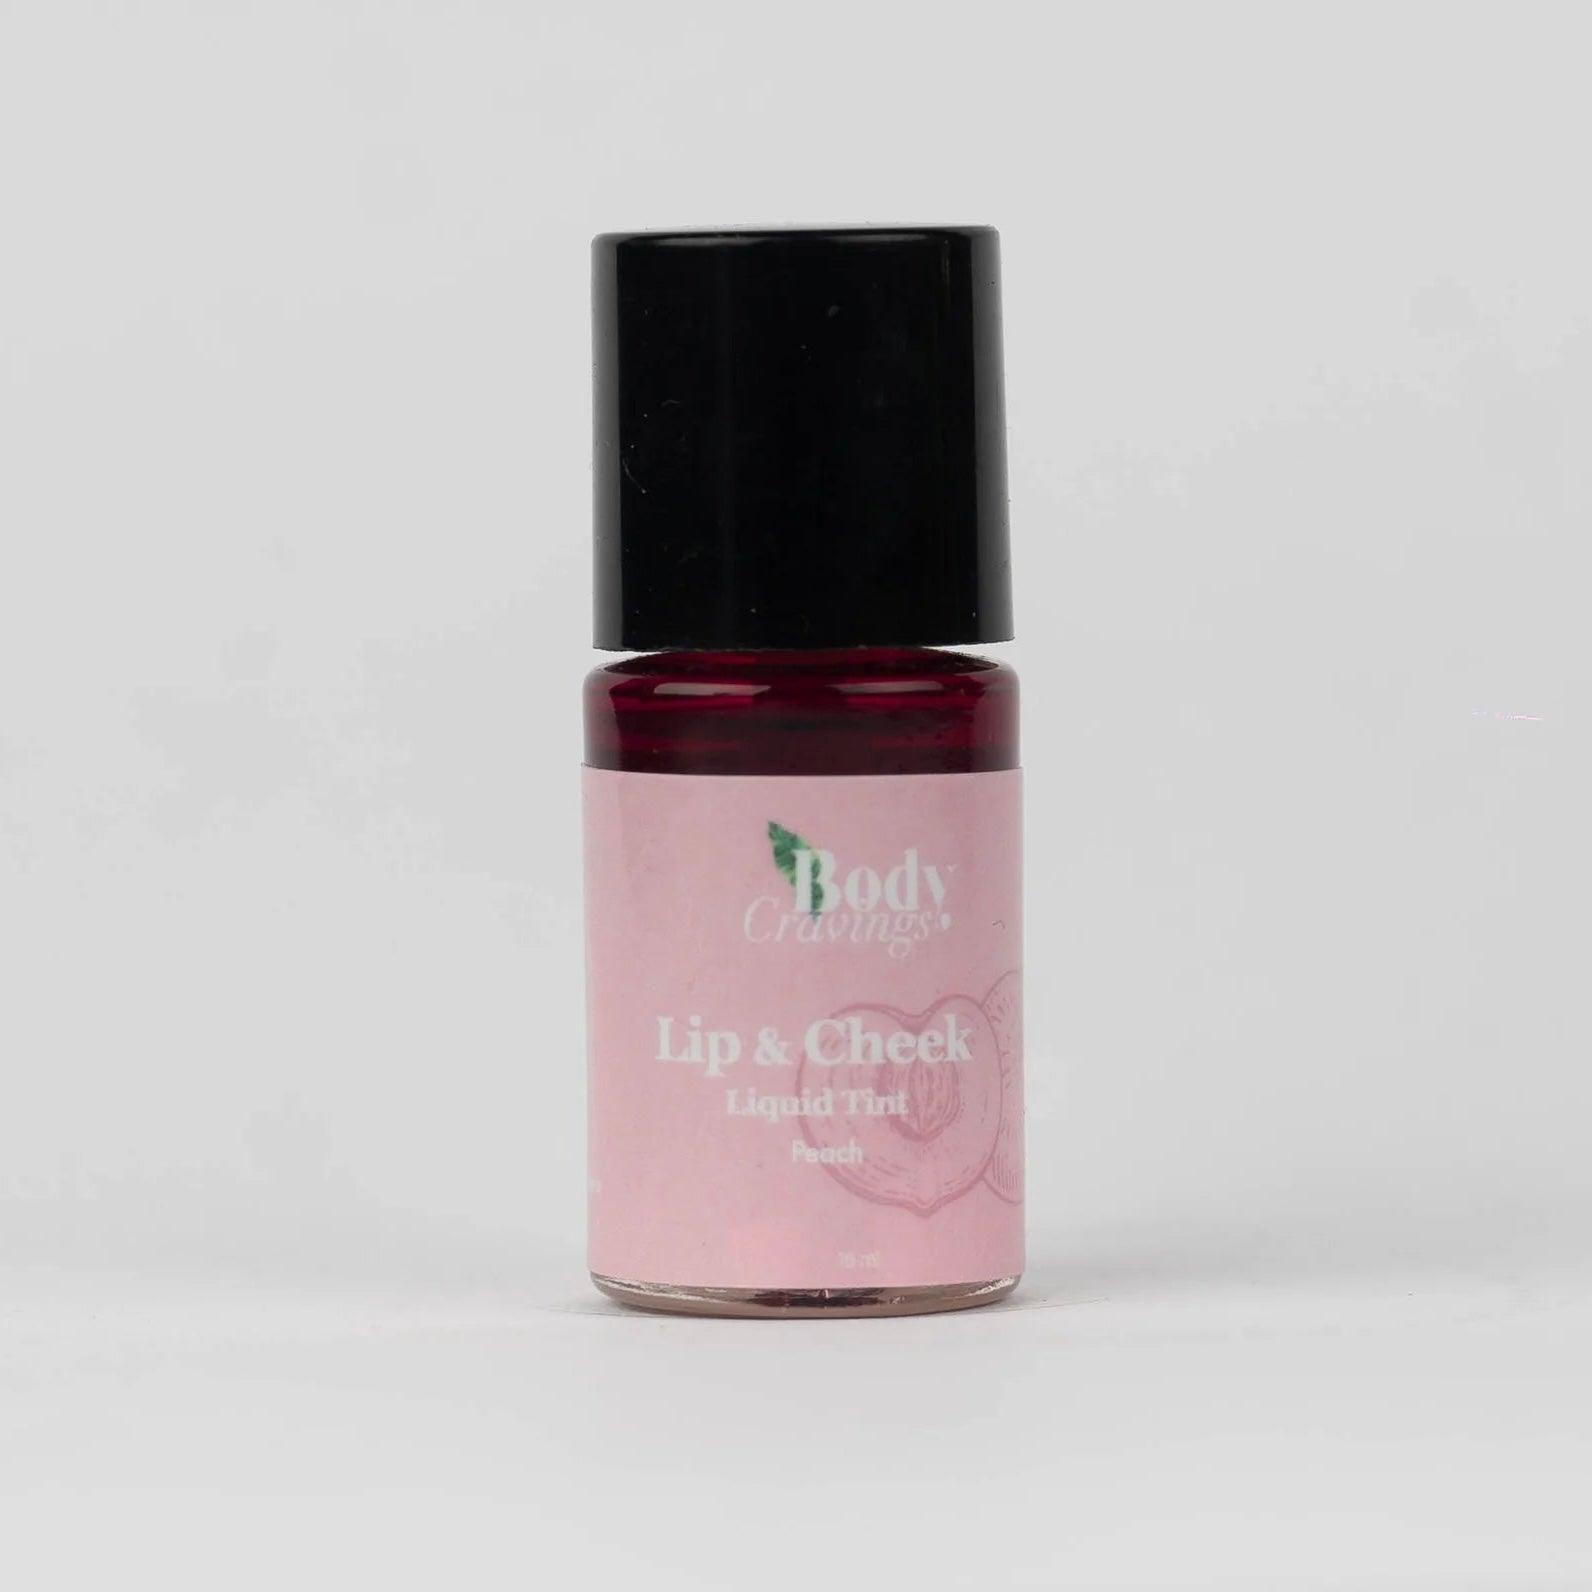 Body Cravings Peach Lip & Cheeks Tint Brush - Beauty Bounty